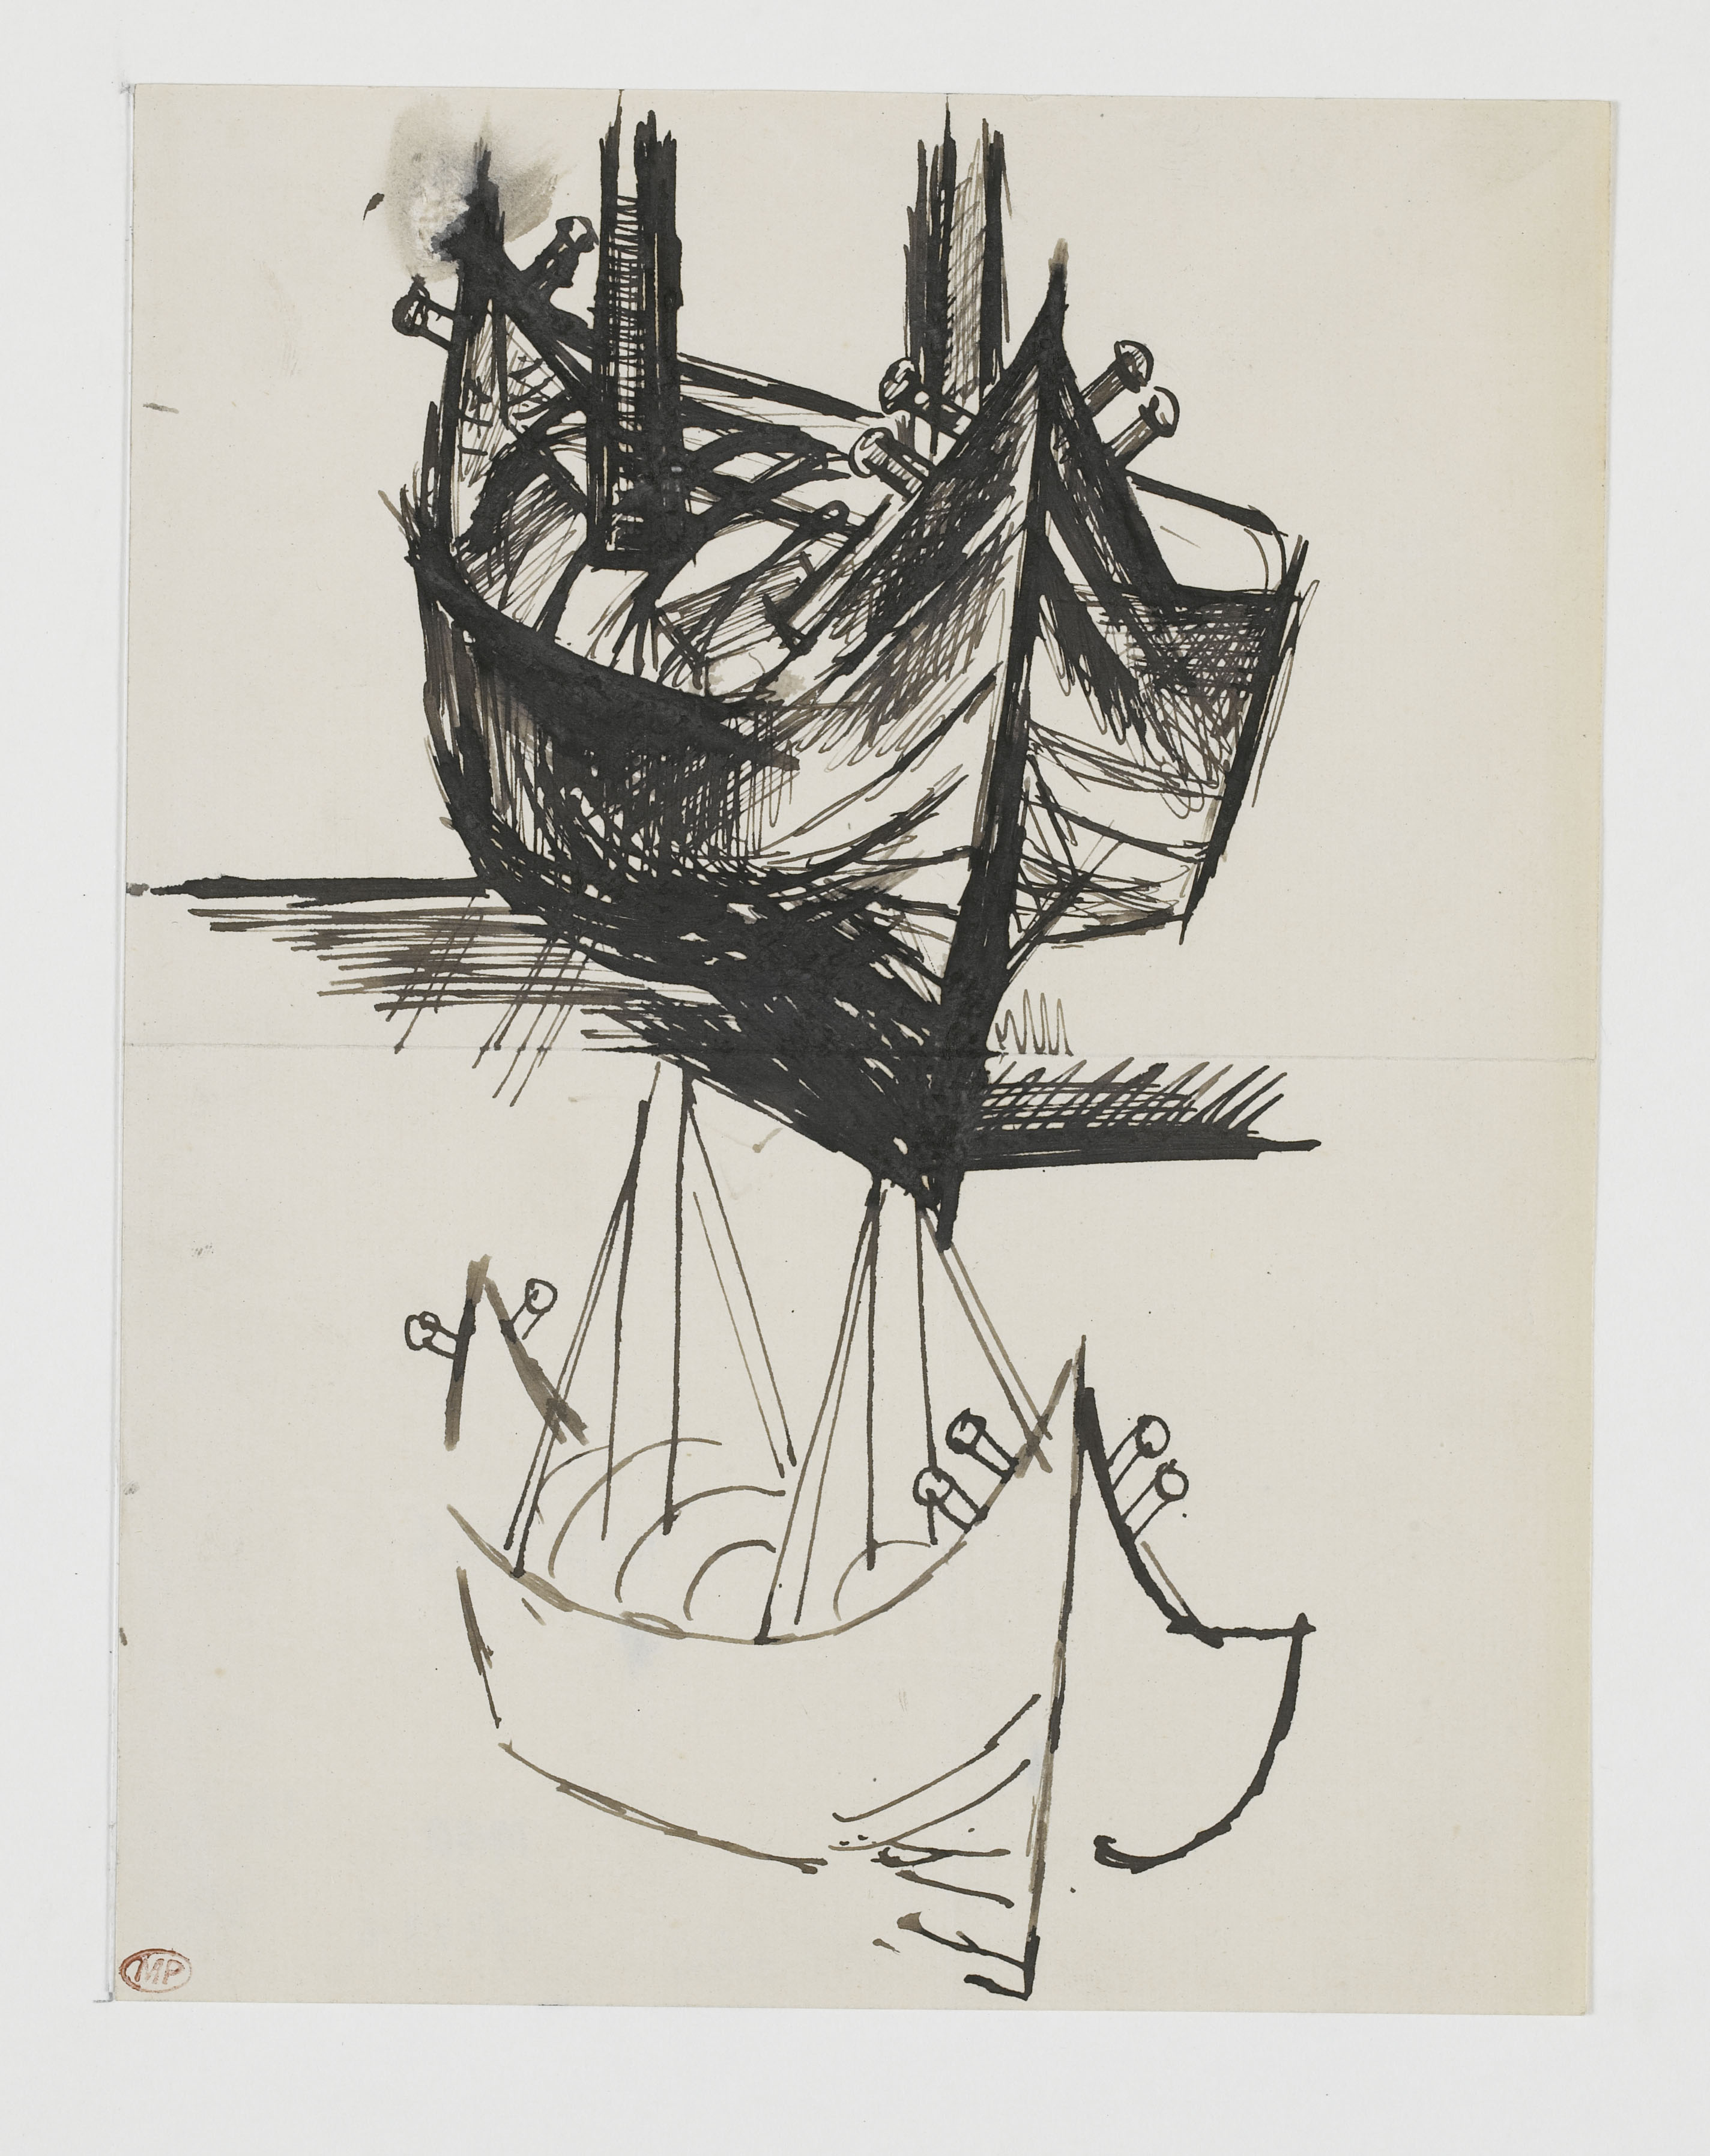 Picasso - Etudes de barque - MP644 - 03-015469